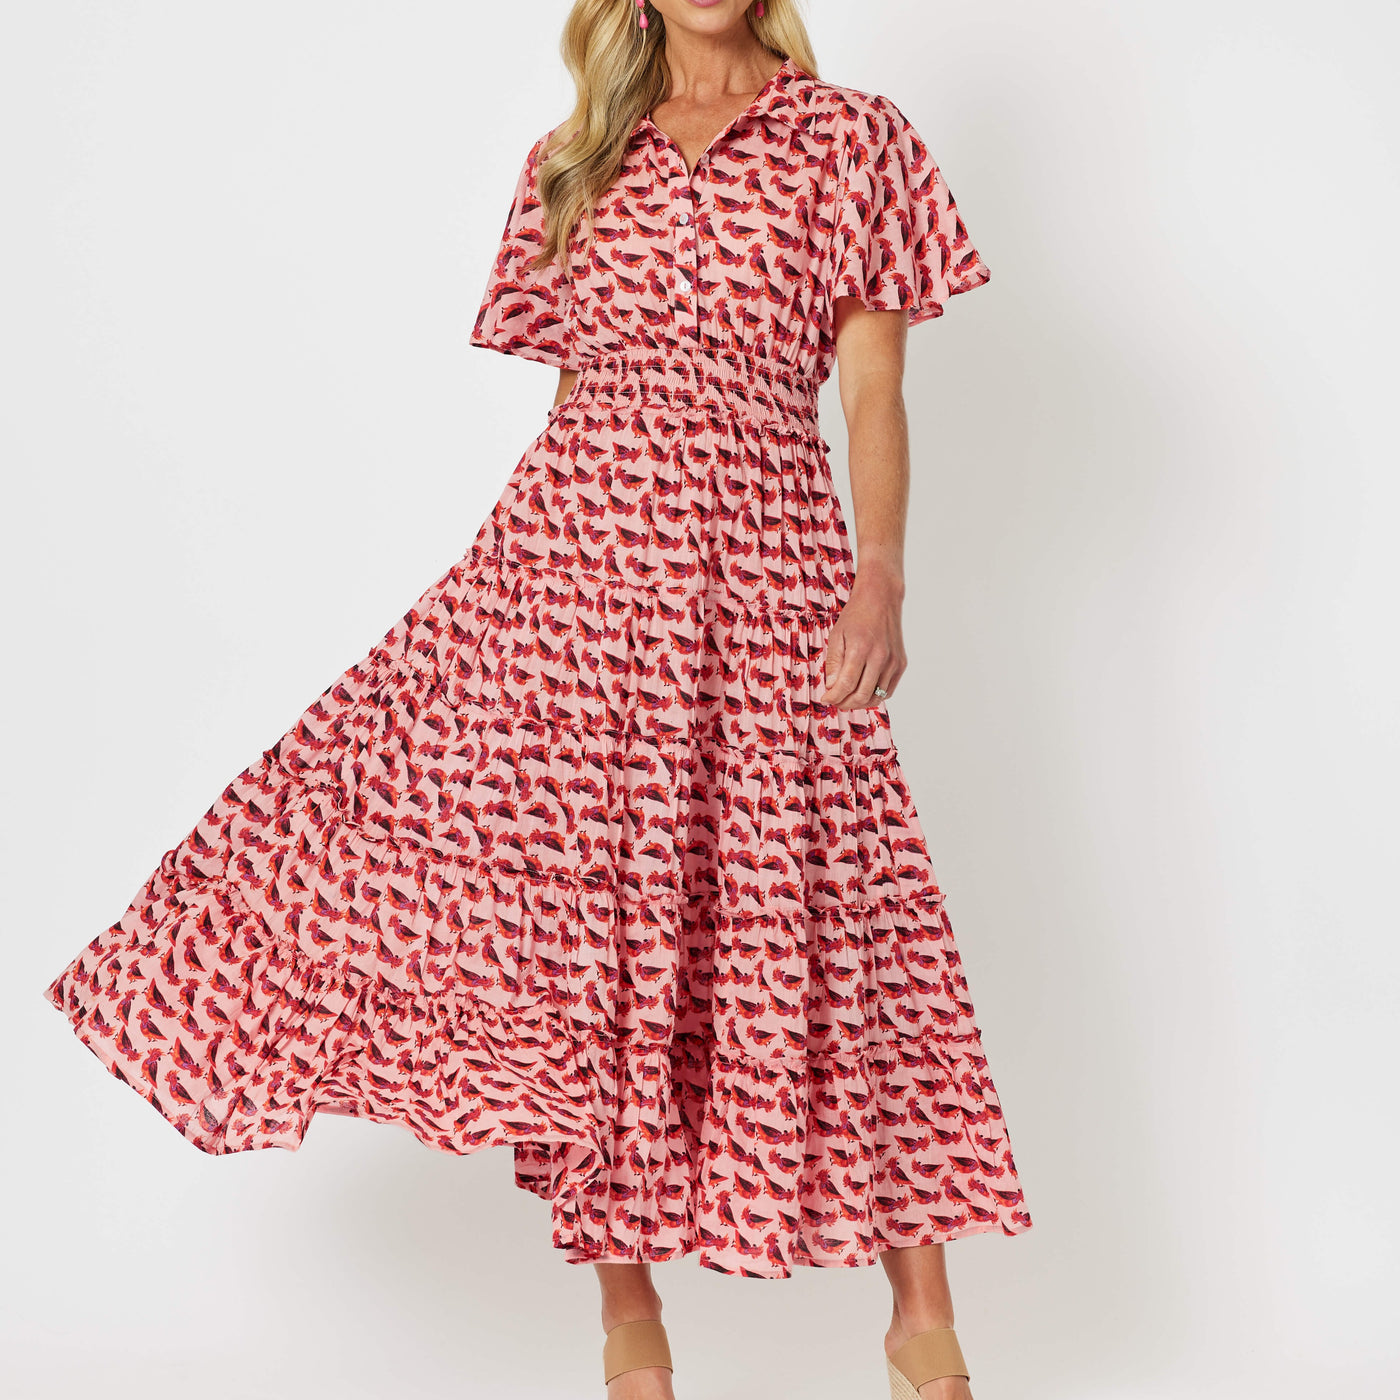 Cockatoo Dress